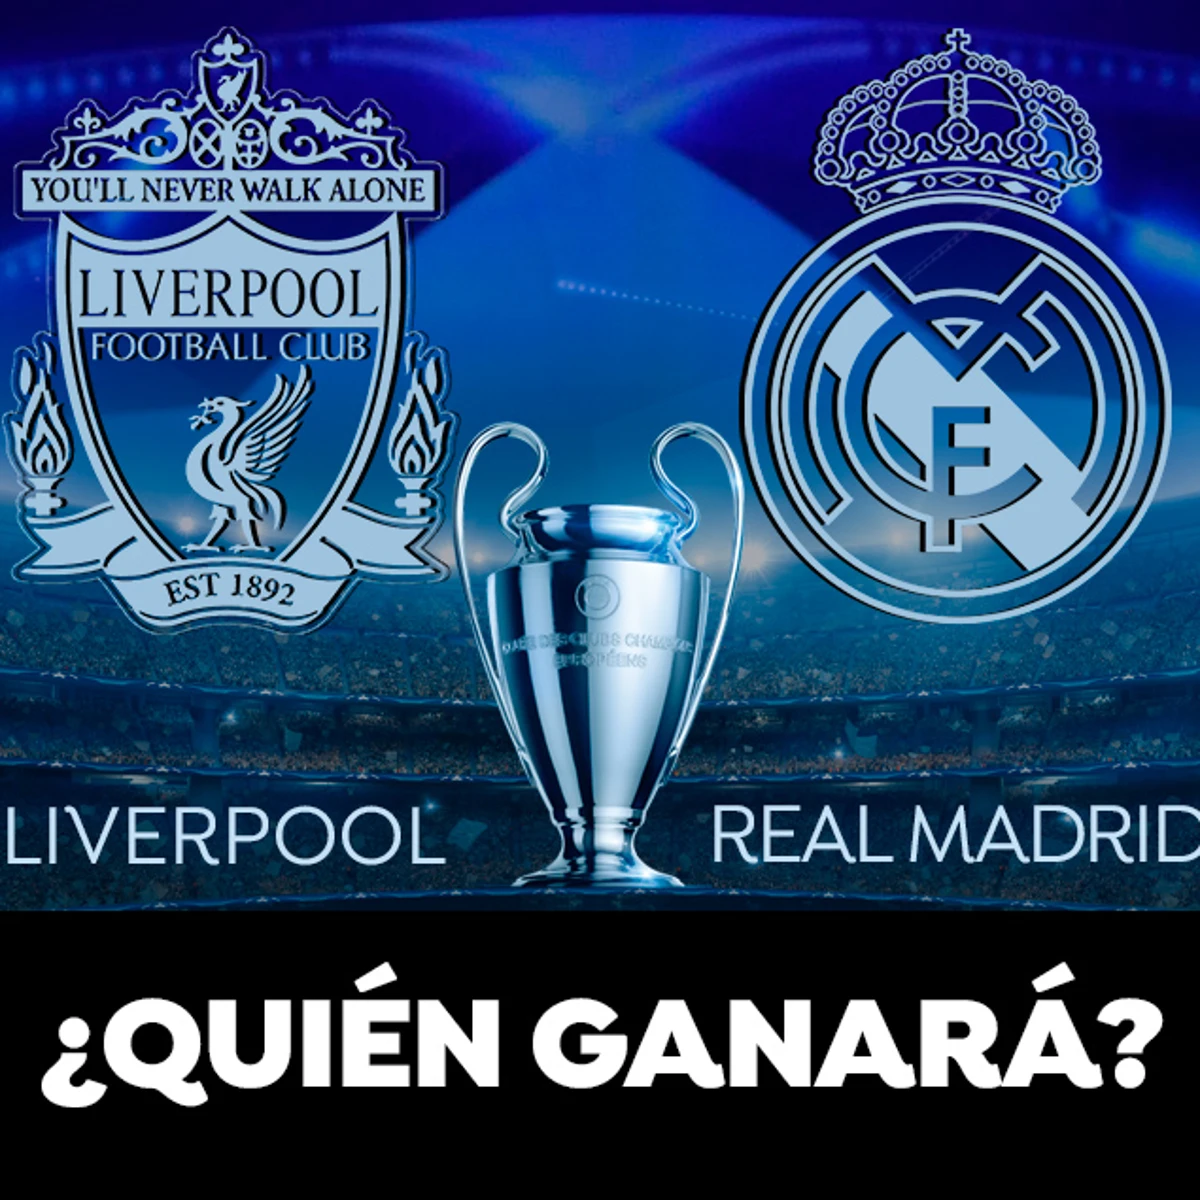 ¿Quién gana la final Real Madrid o Liverpool